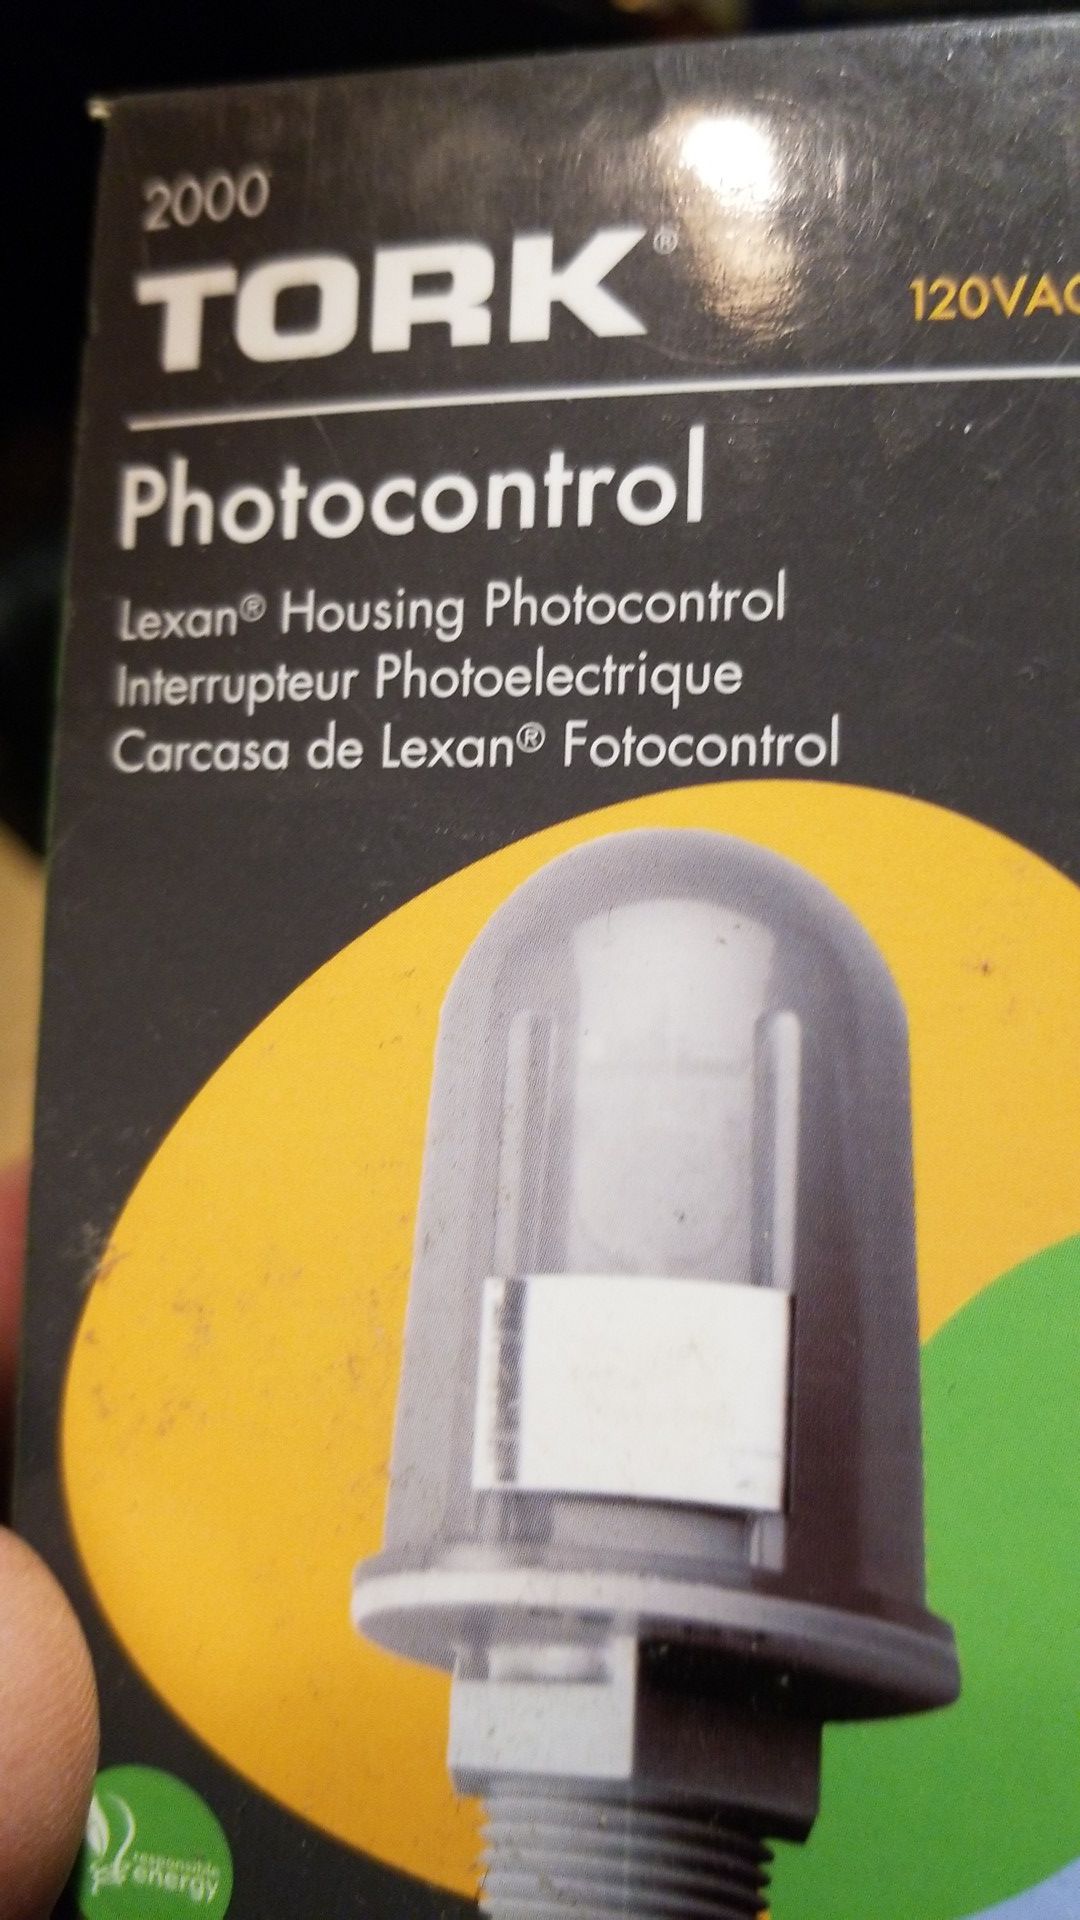 New in box tork photocontrol